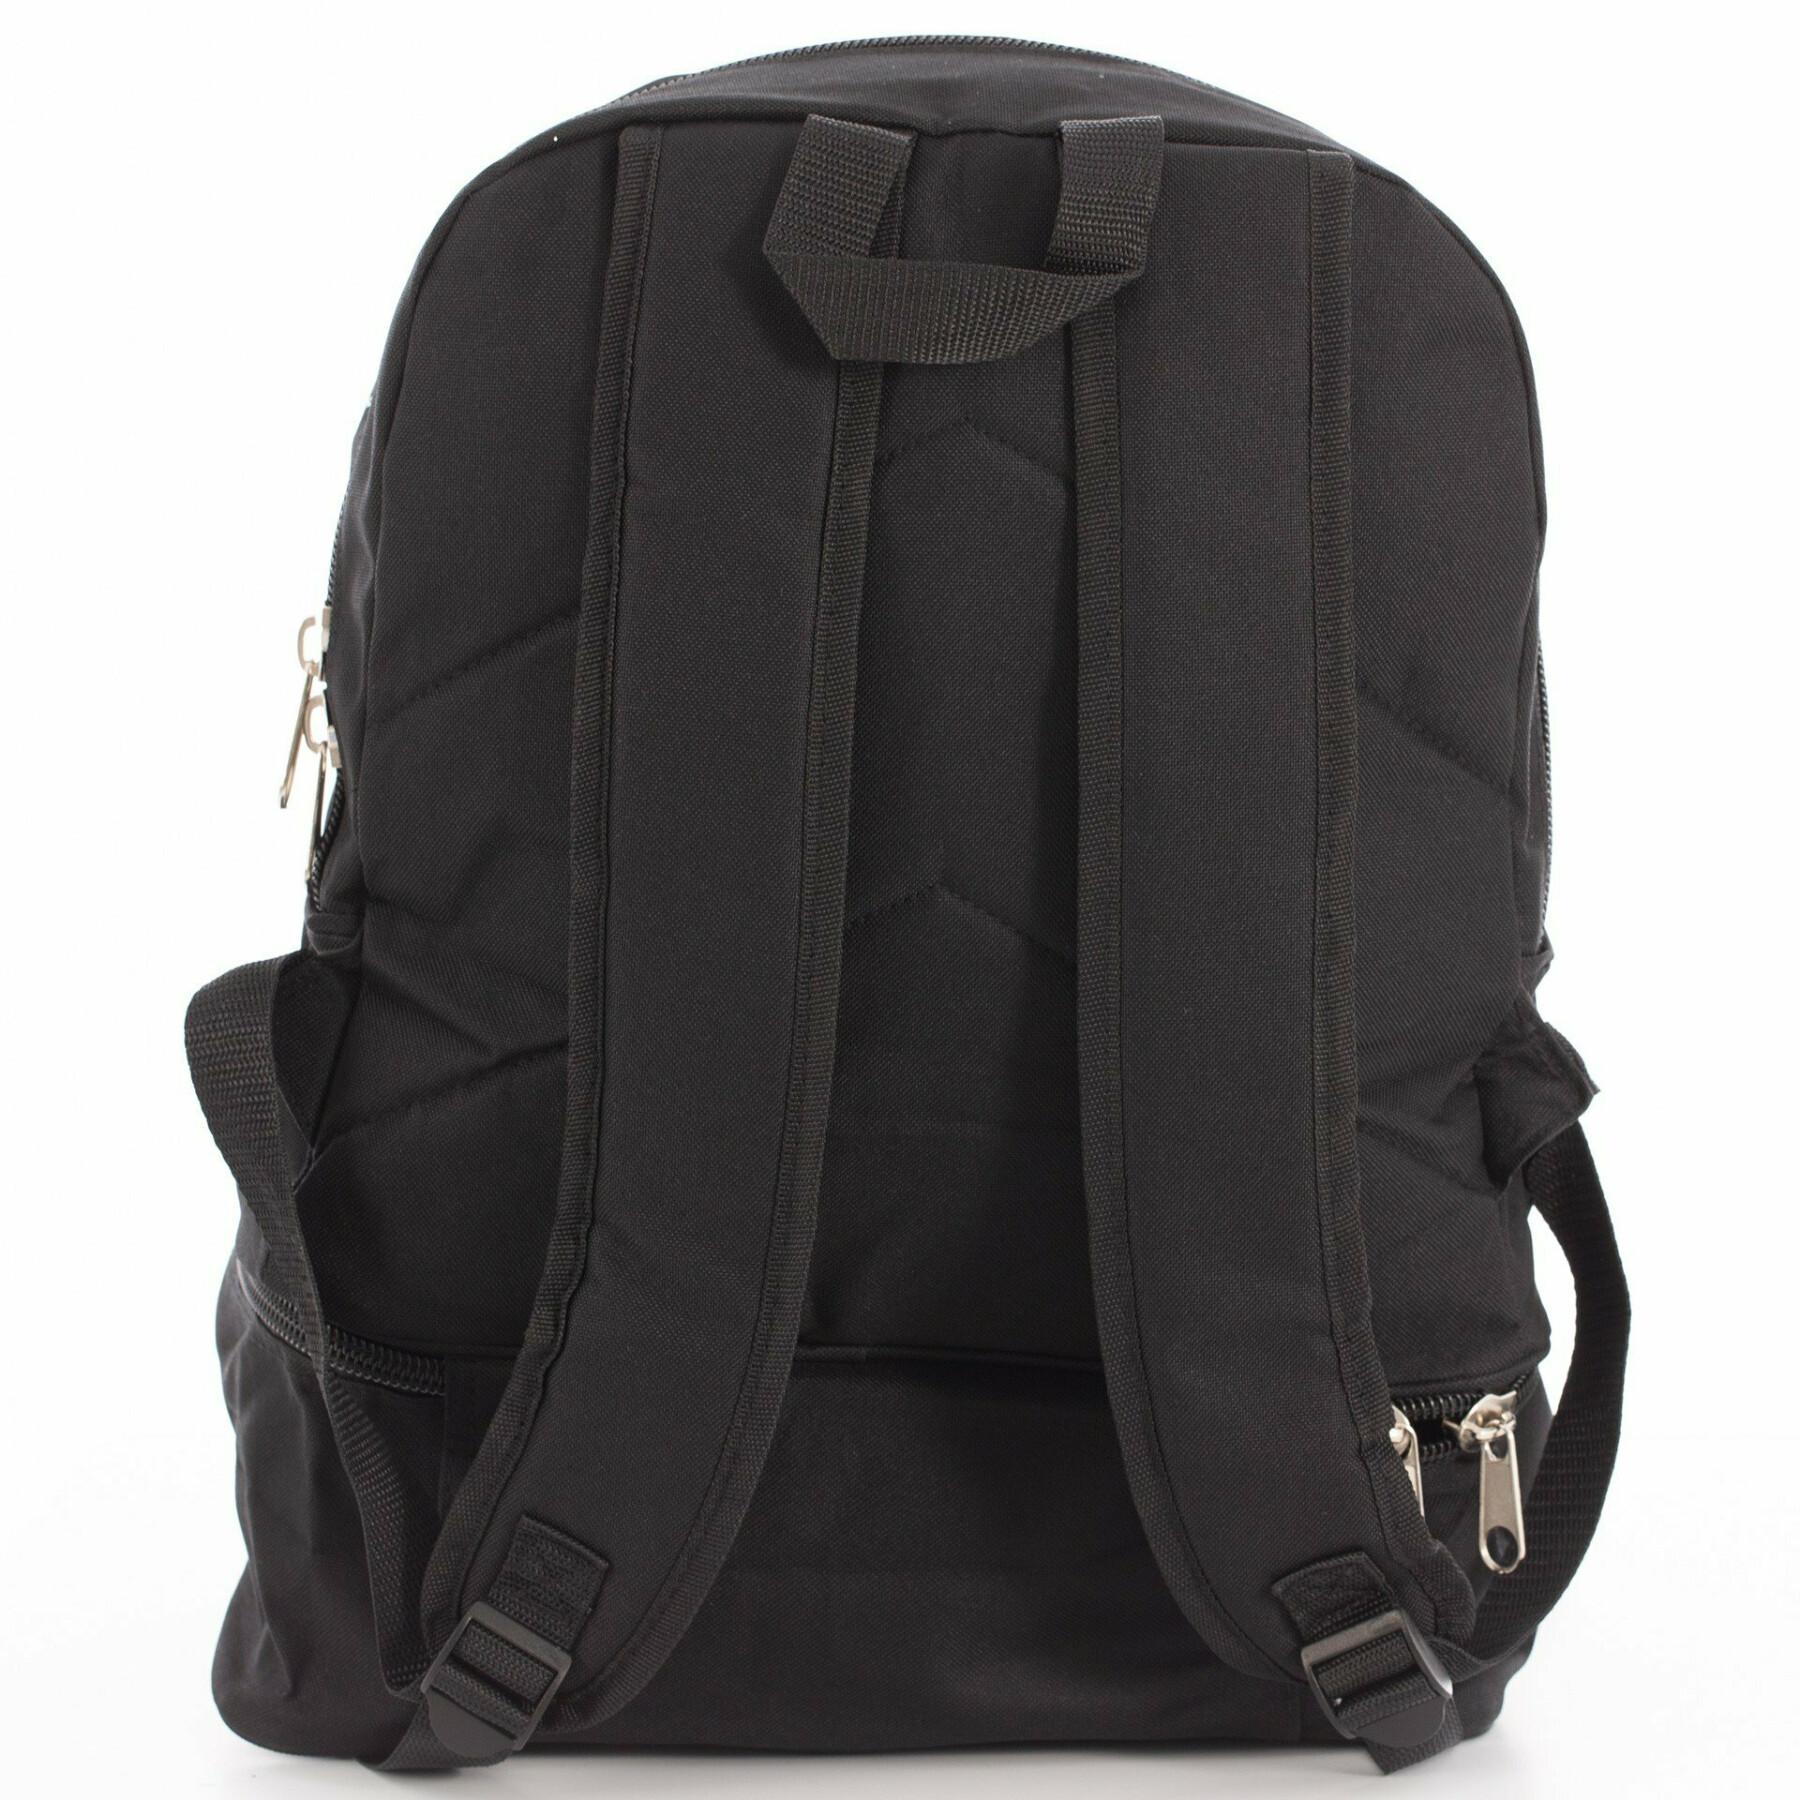 Backpack Softee Equipo